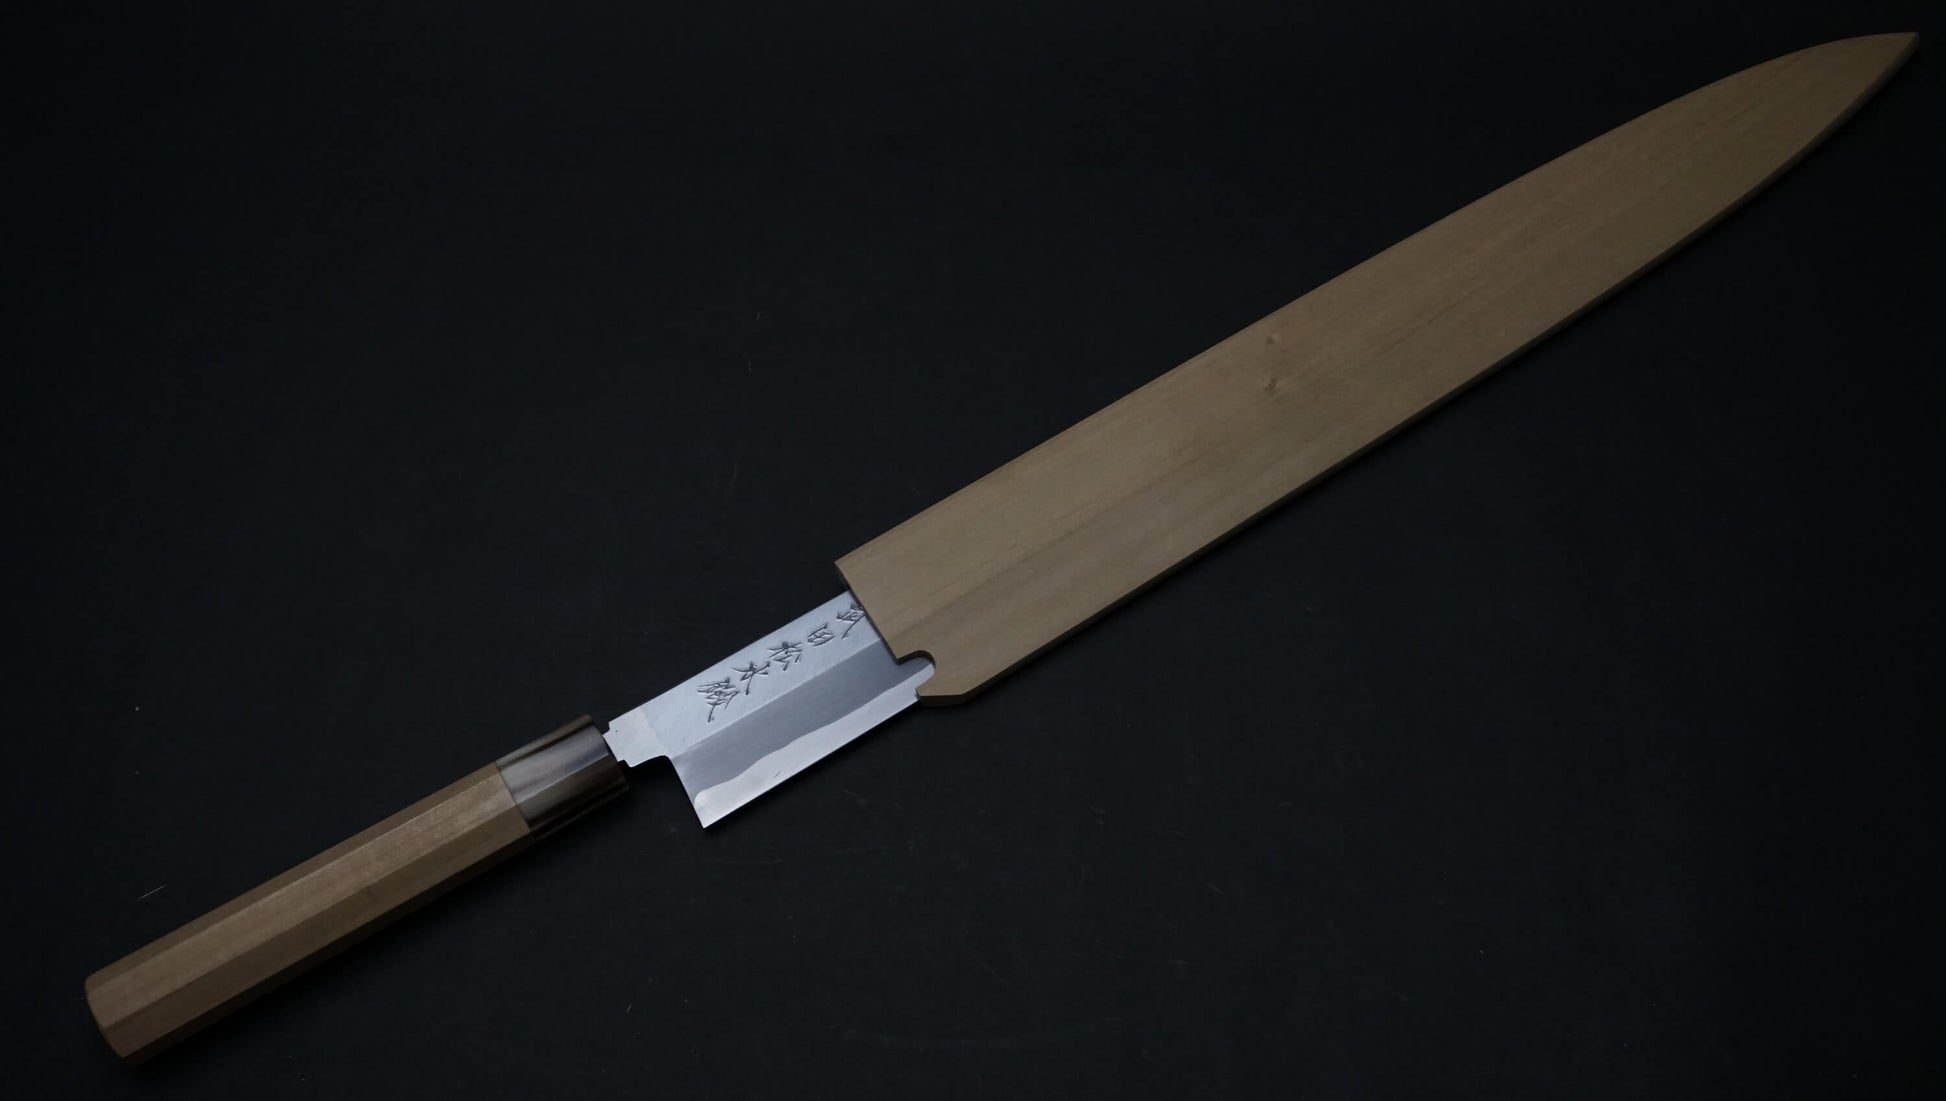 Handmade Chinese chef's Knife TAKEDA HAMONO - Super blue steel - 19